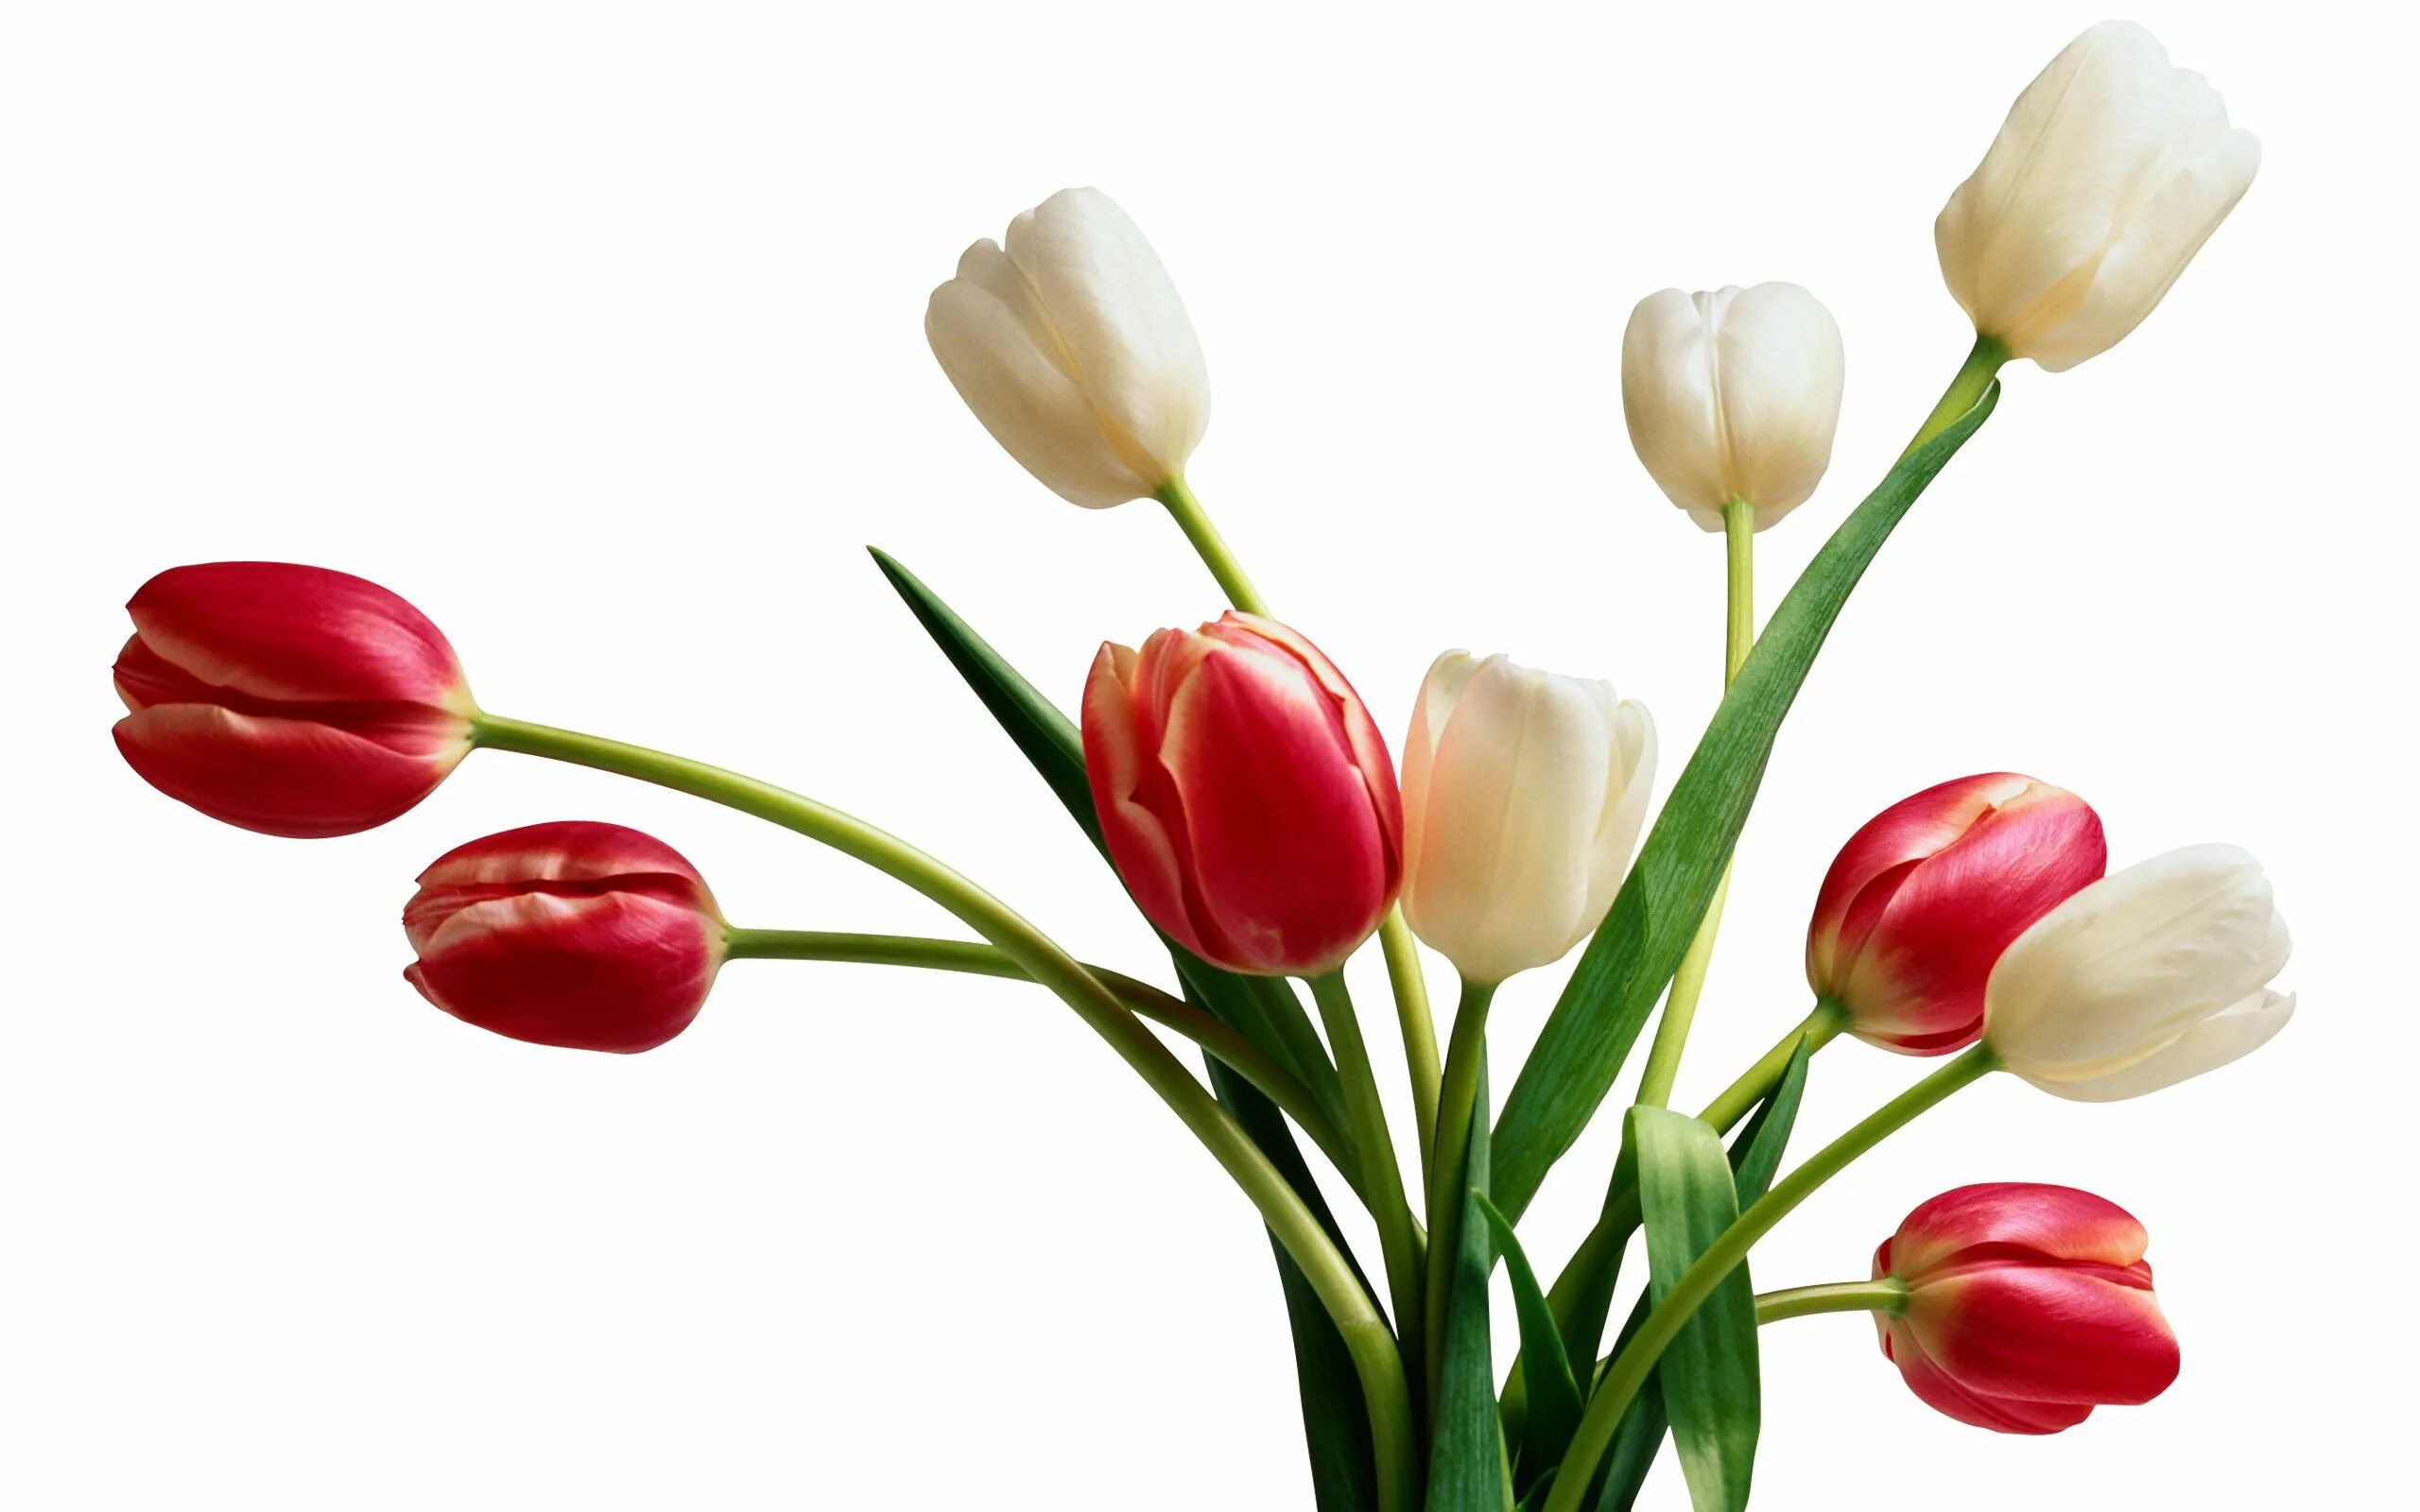 3 красных тюльпана. Цветы тюльпаны. Тюльпаны на белом фоне. Цветы на белом фоне. Букет тюльпанов.